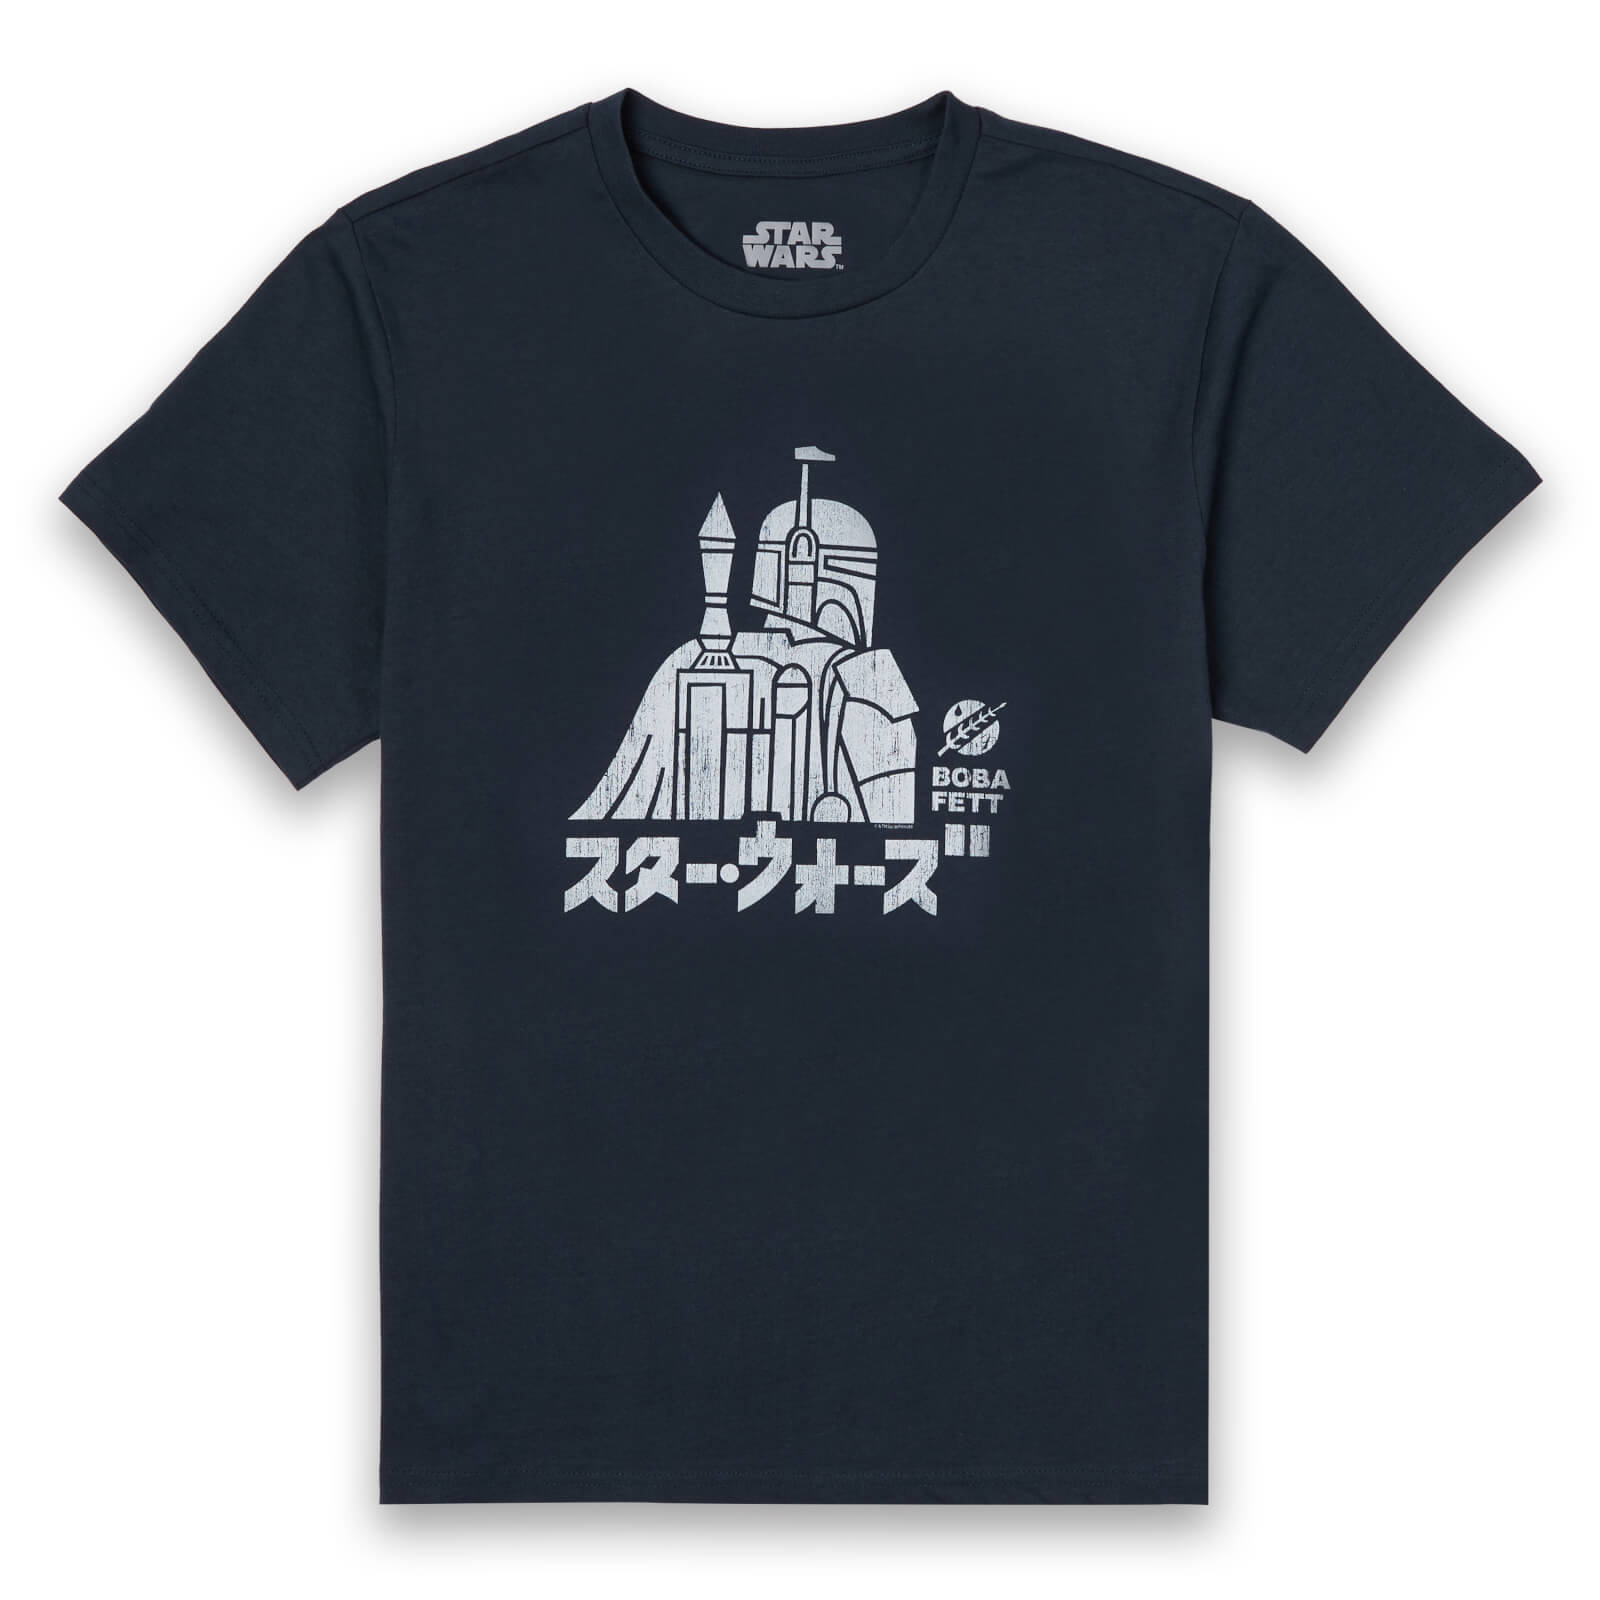 Star Wars Kana Boba Fett t-shirt - Navy - M